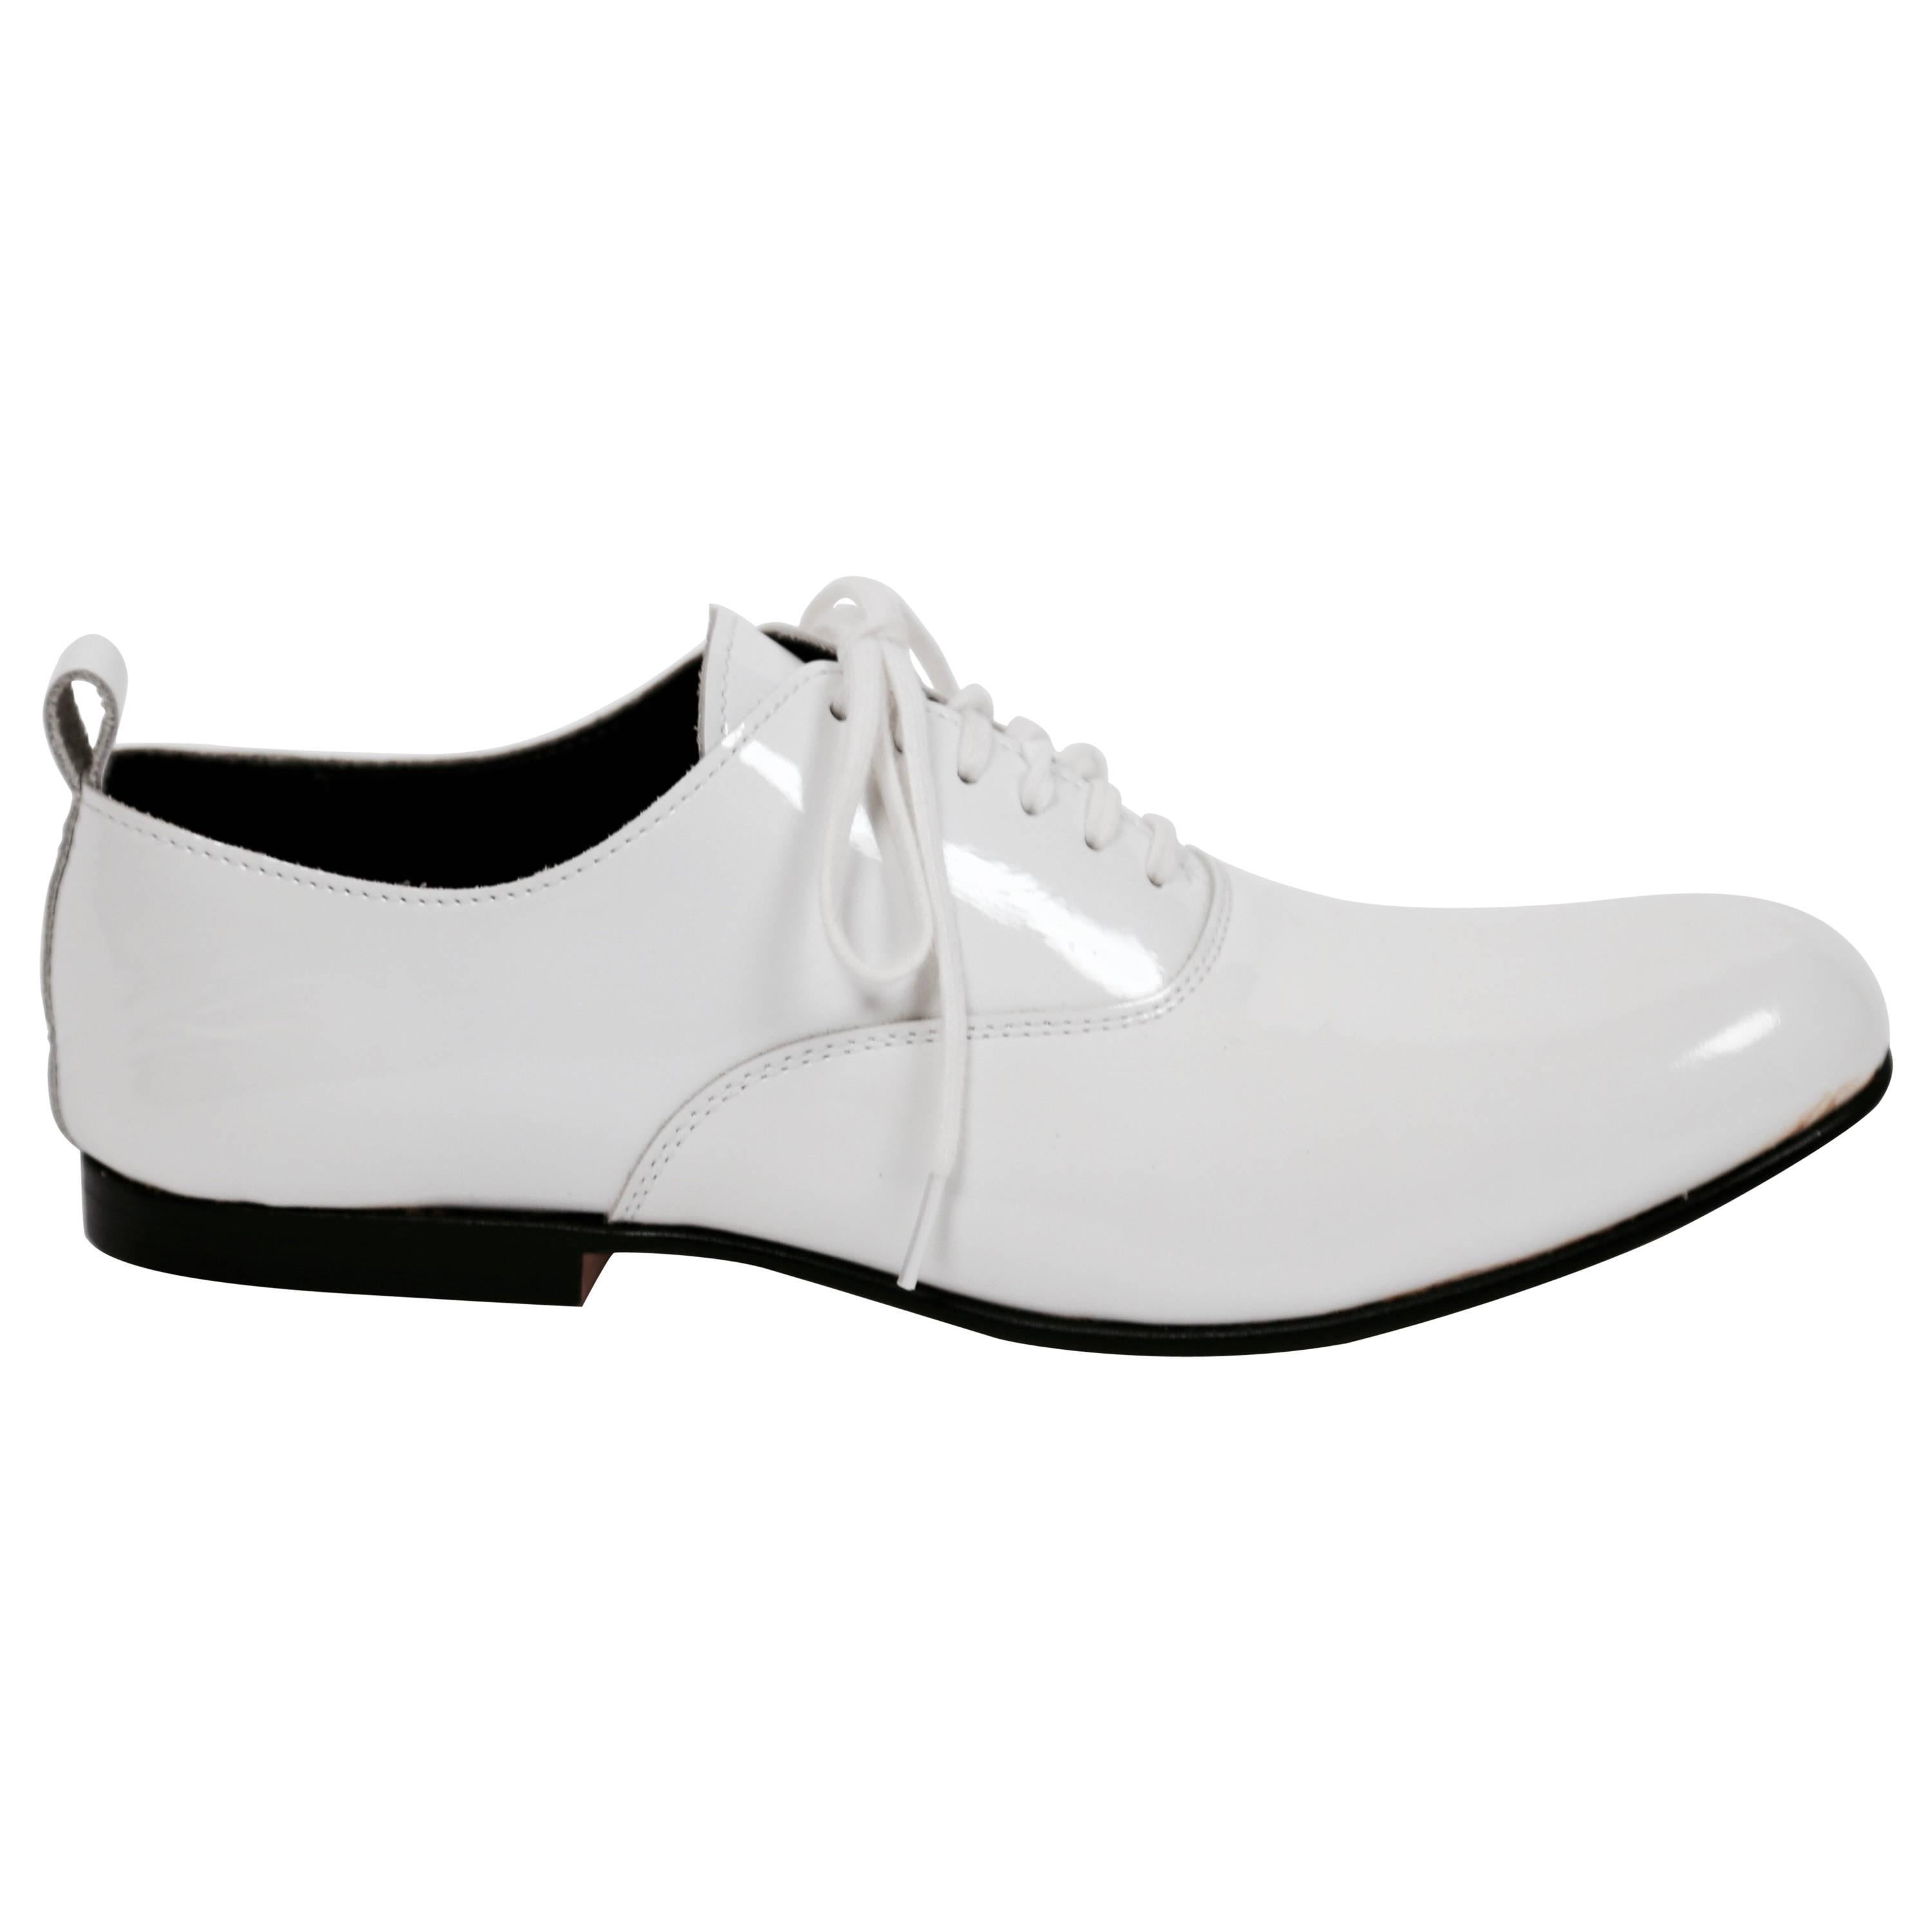 unworn COMME DES GARCONS white patent leather oxford shoes - 7